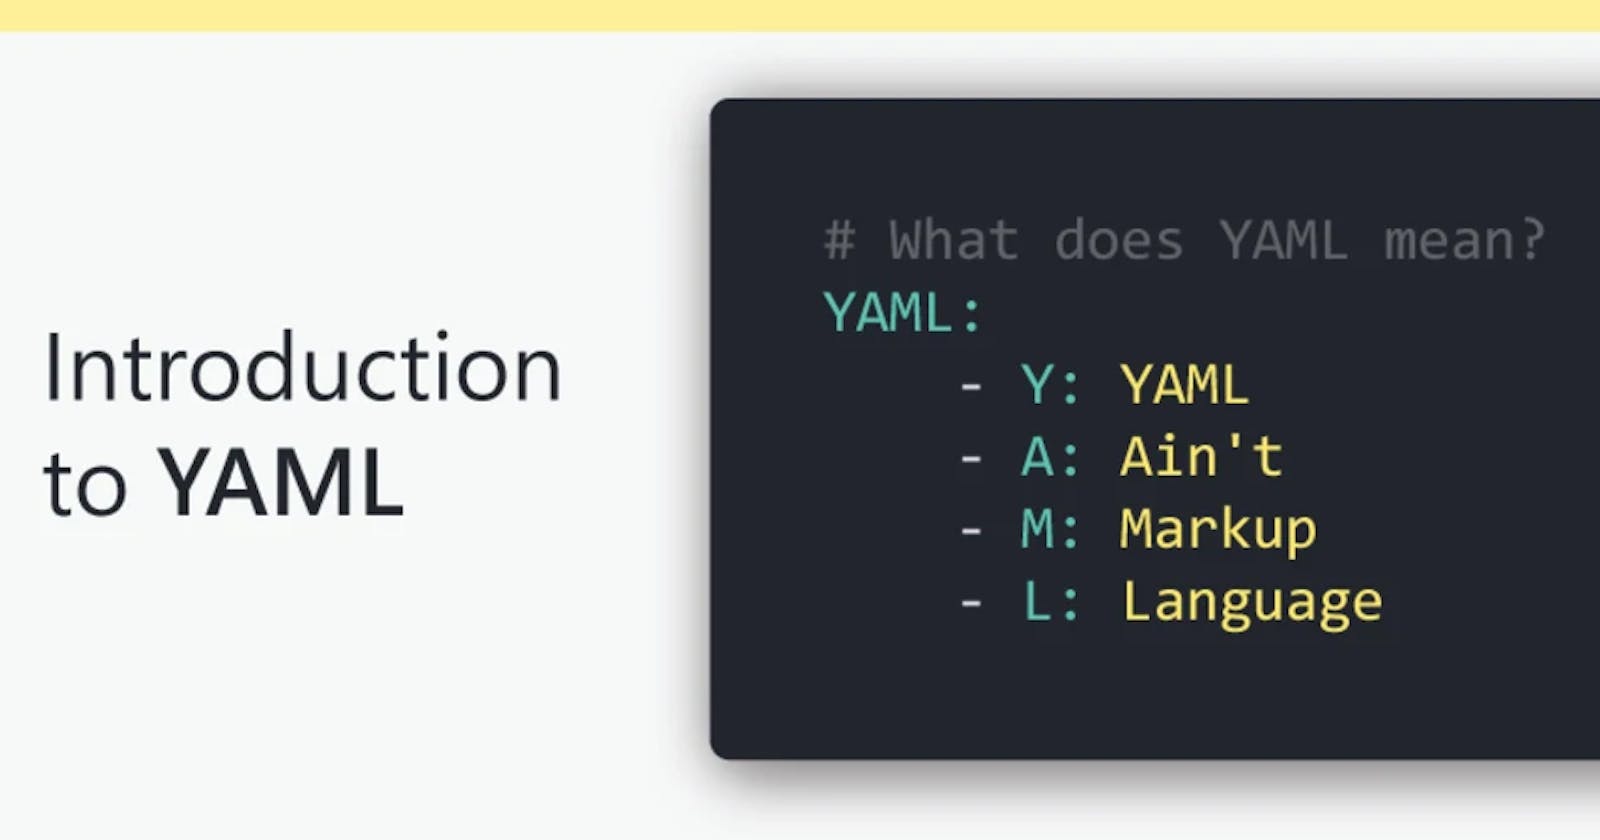 Introduction to YAML